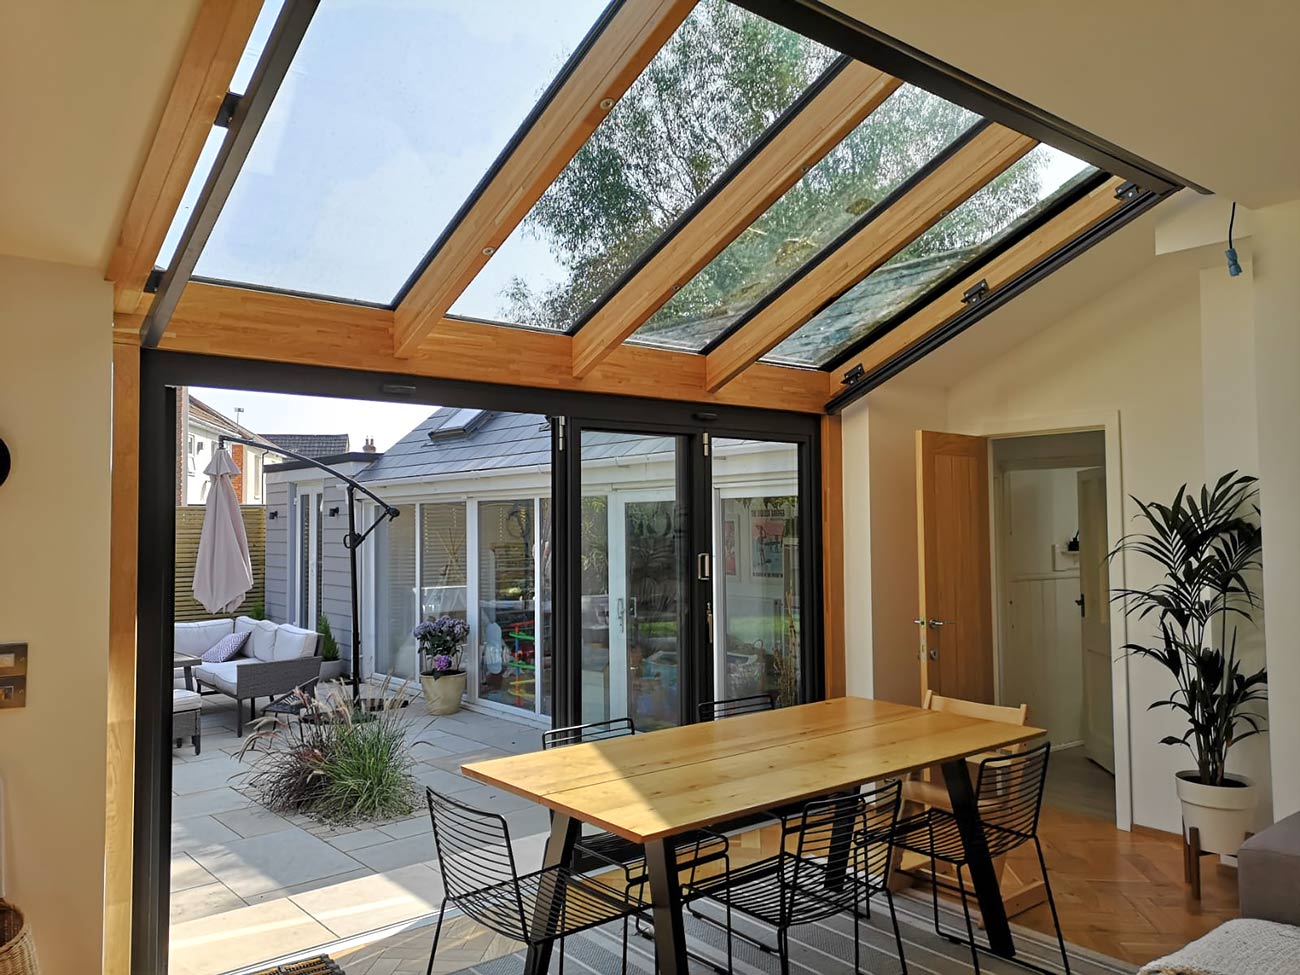 Solarlux Glass Roof - interior